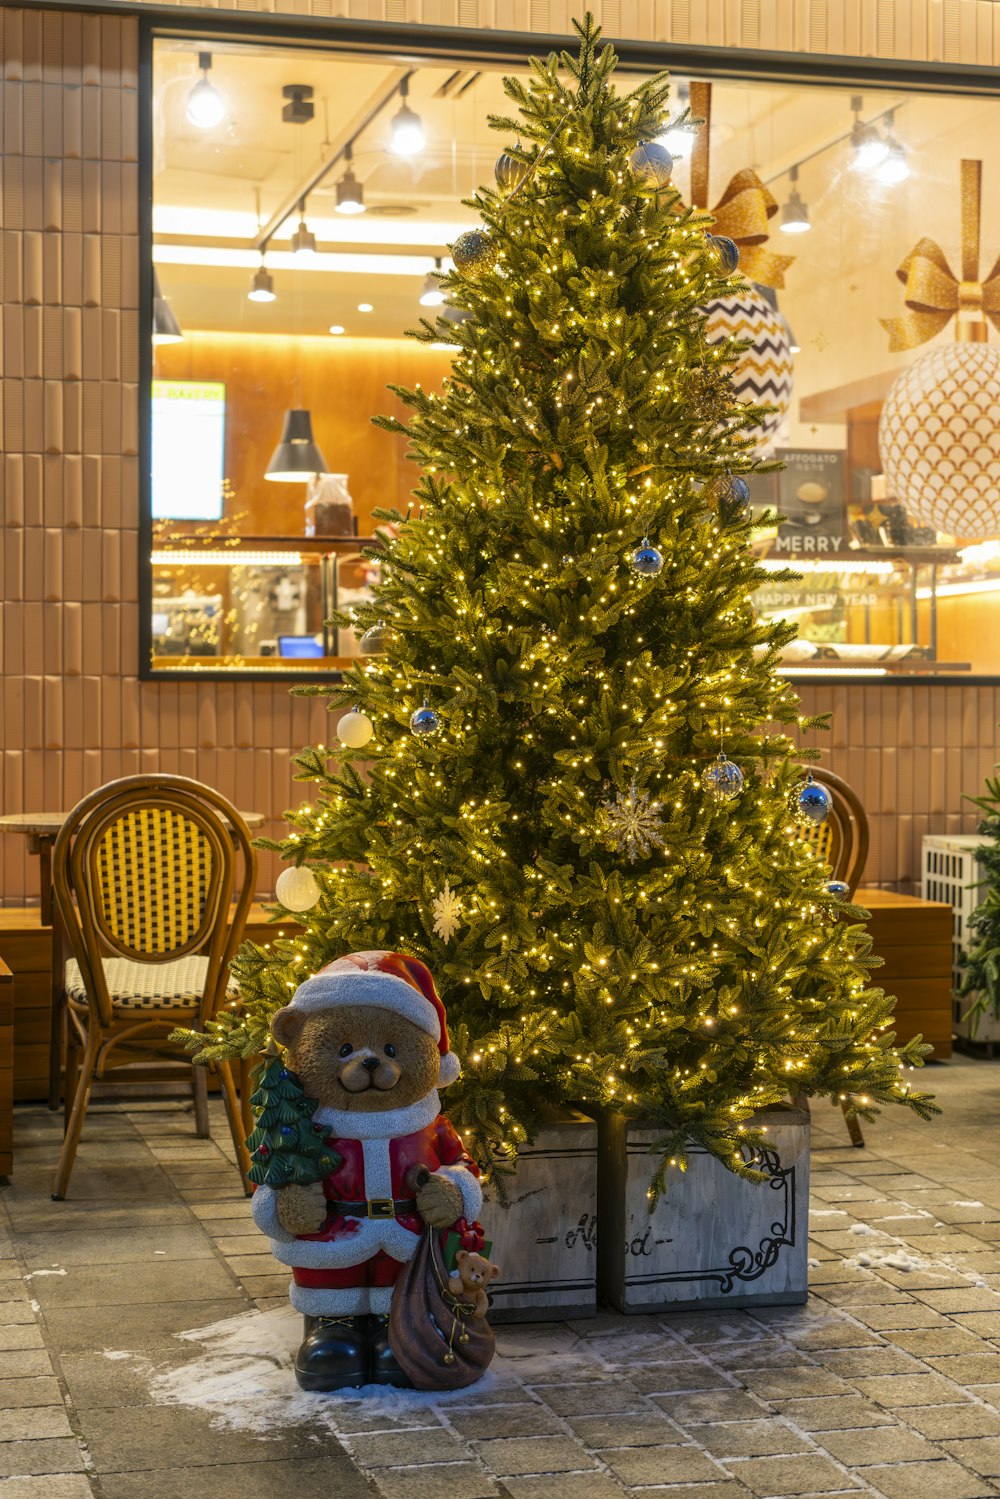 a teddy bear sitting next to a christmas tree